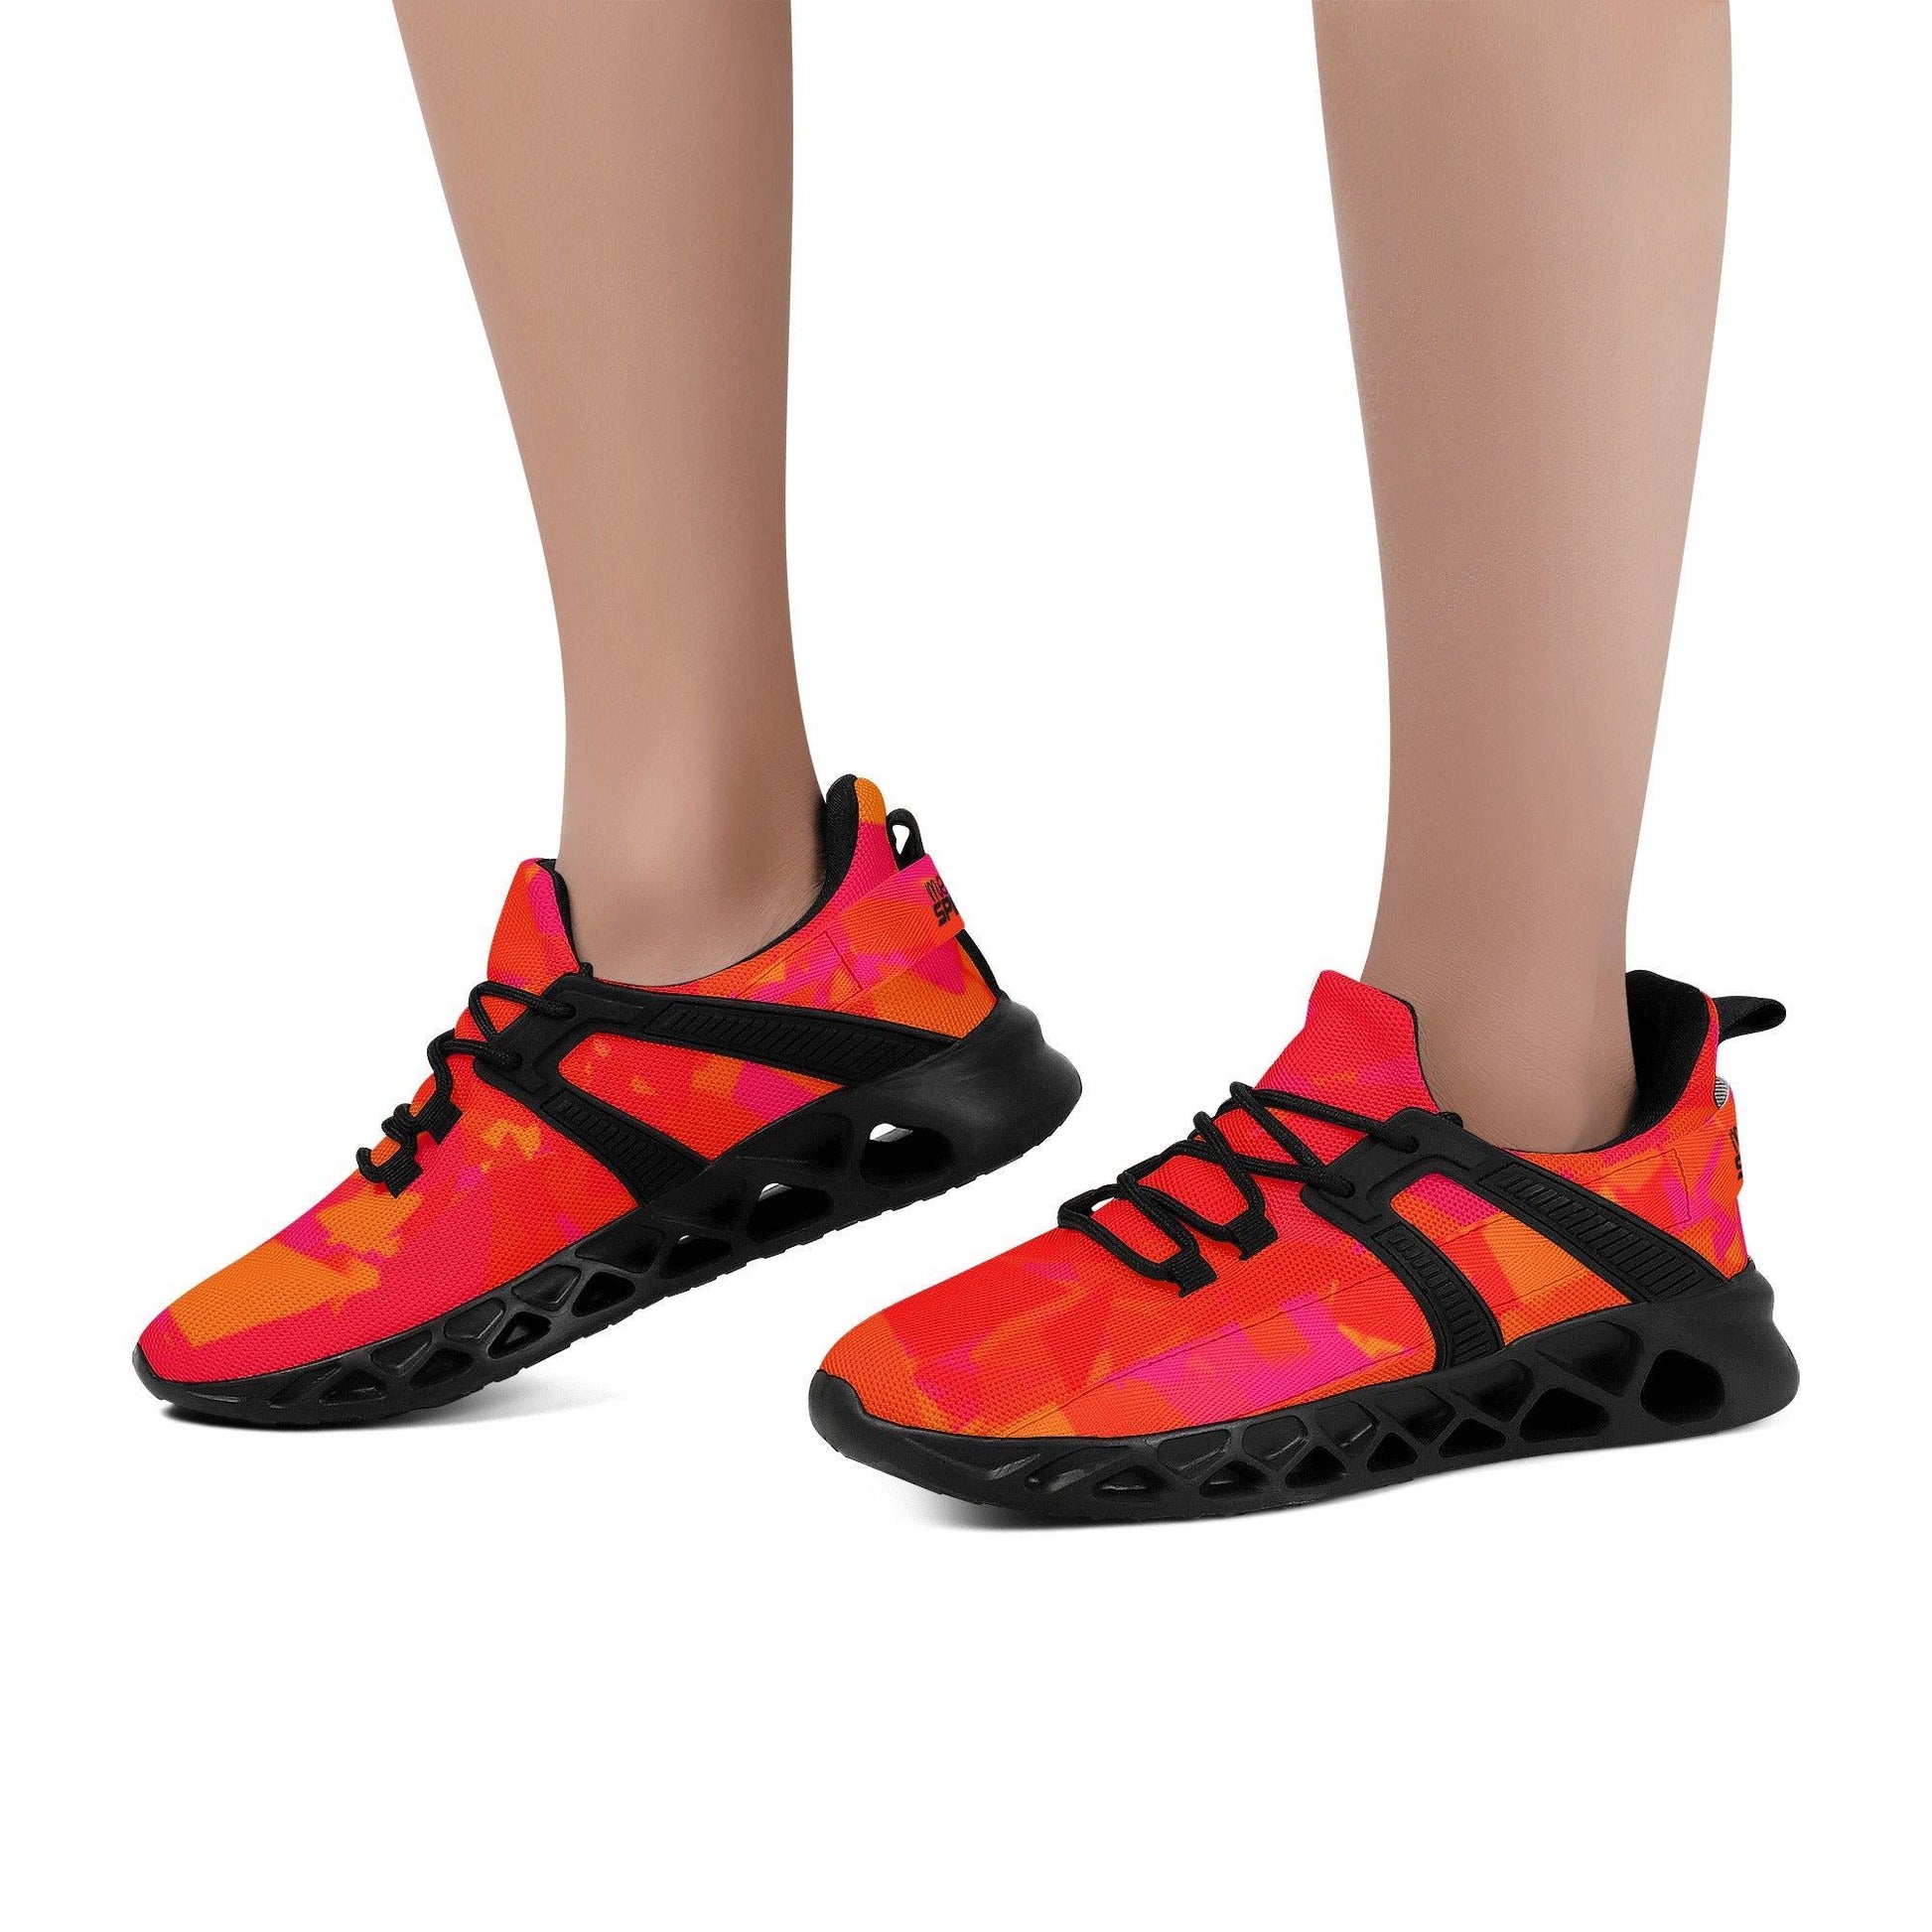 Red Crystal Meeshy Speed Damen Laufschuhe -- Red Crystal Meeshy Speed Damen Laufschuhe - undefined Laufschuhe | JLR Design